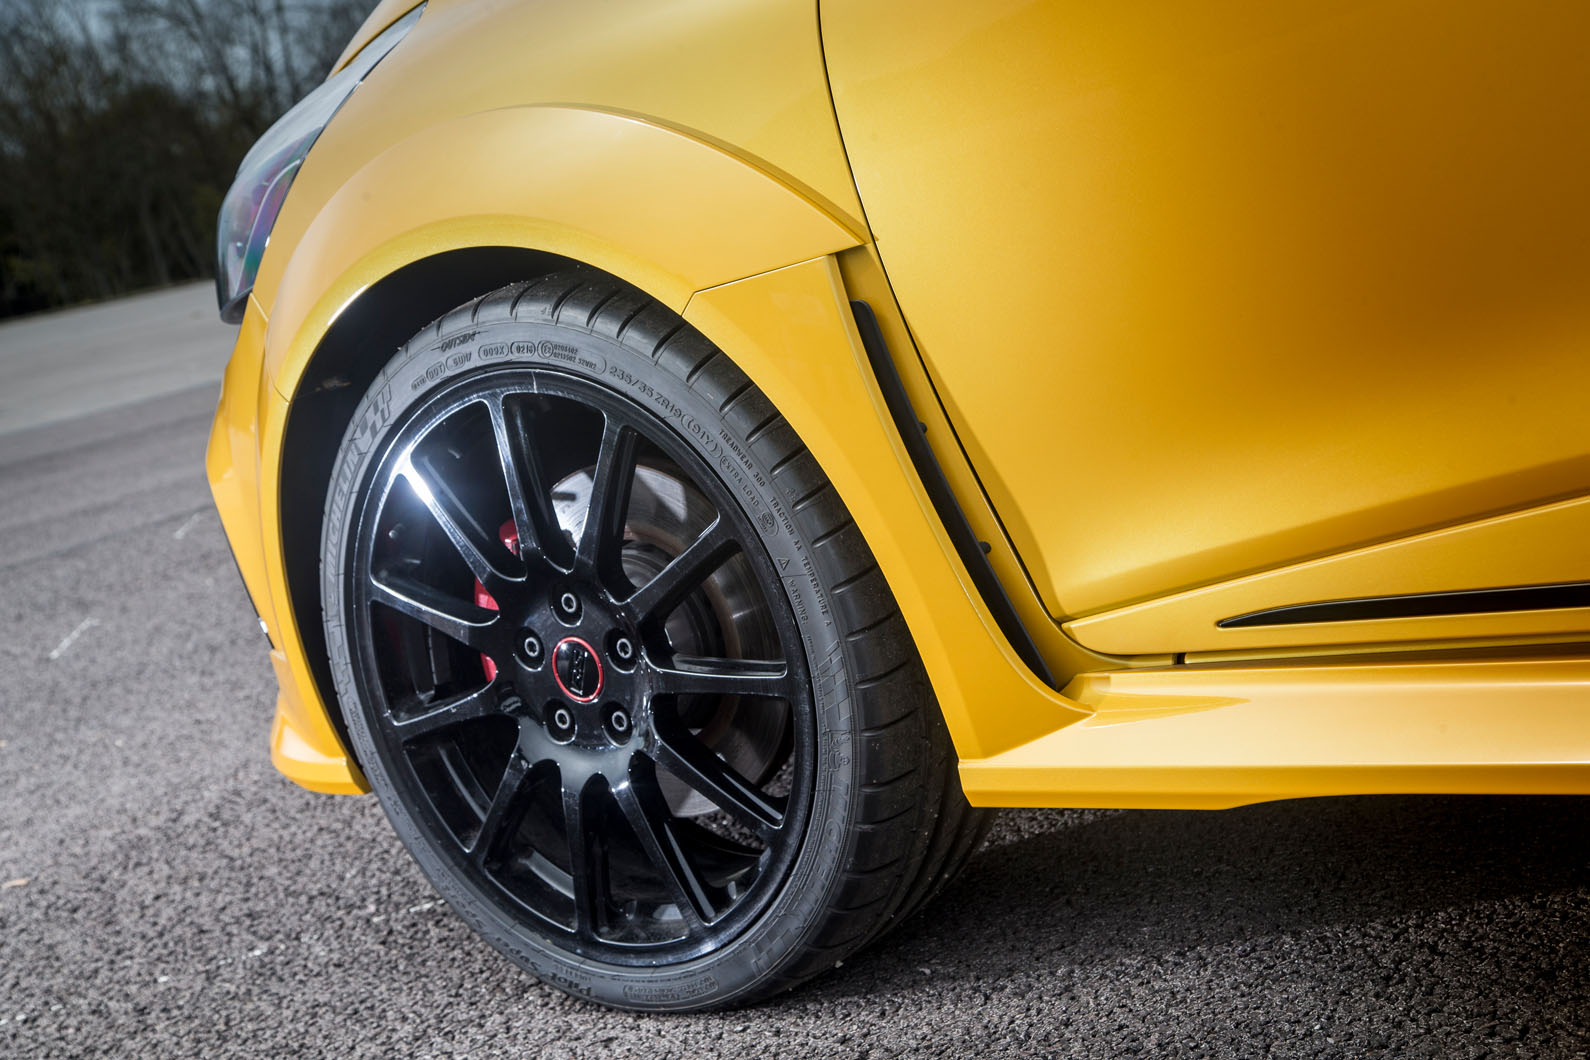 Renault Clio RS16 concept won't make production